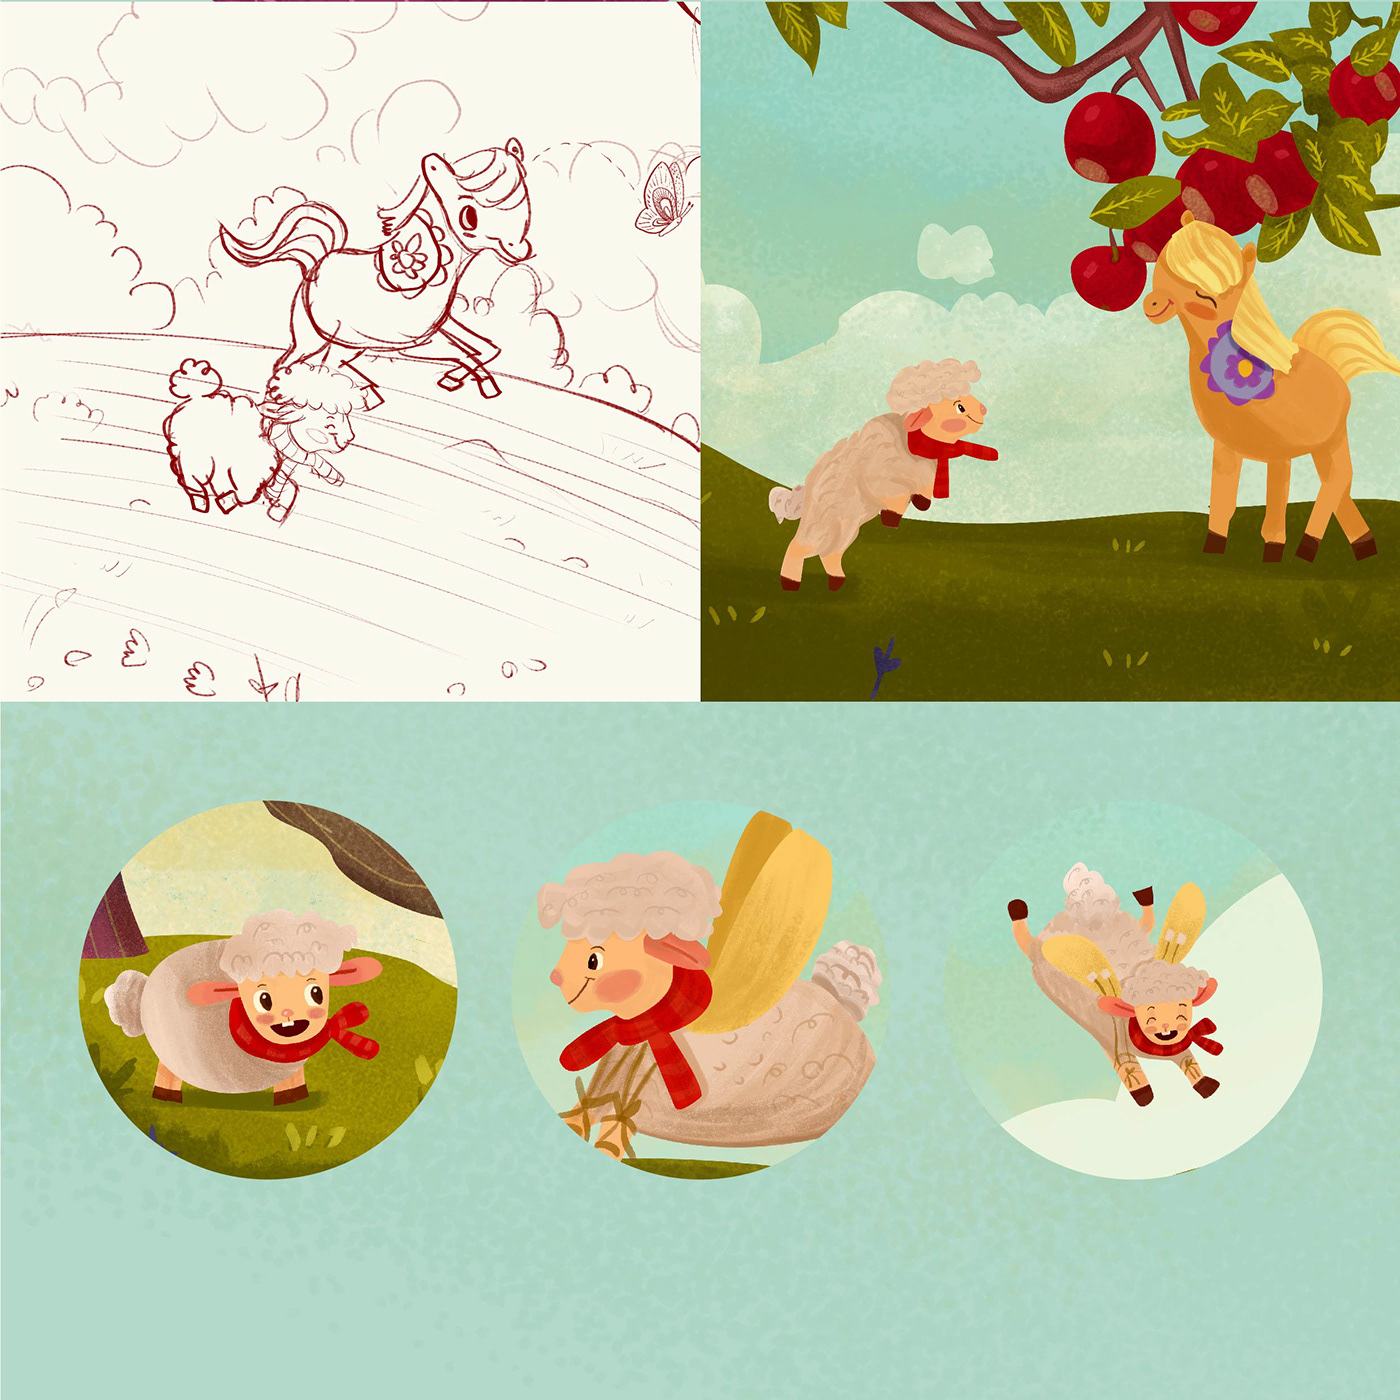 cartoon children childrenbook concept art story animals farm